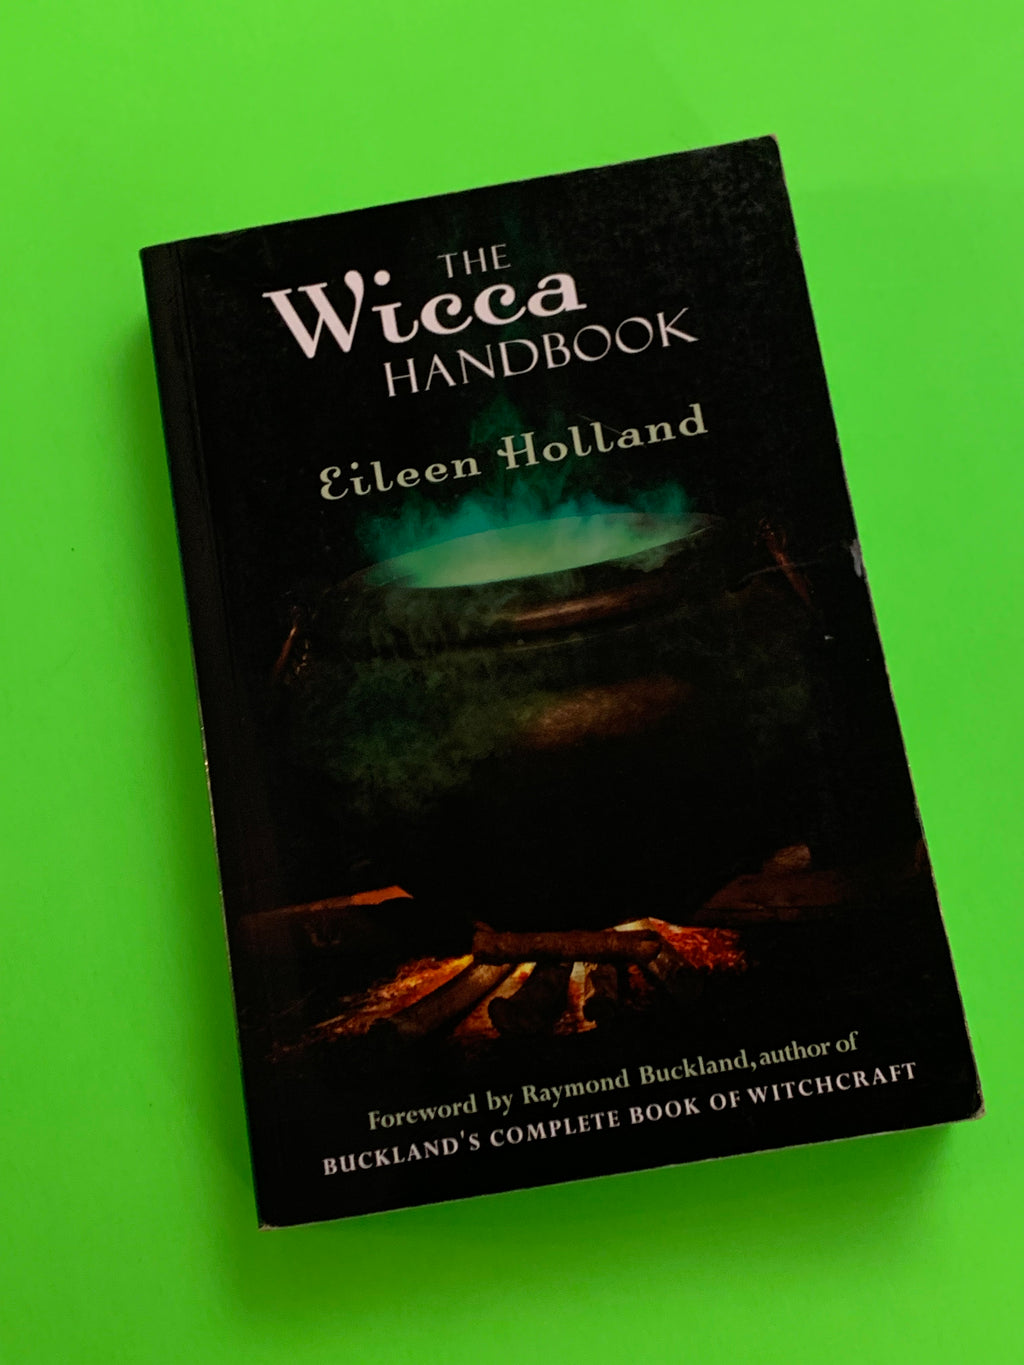 The Wicca Handbook- By Eileen Holland